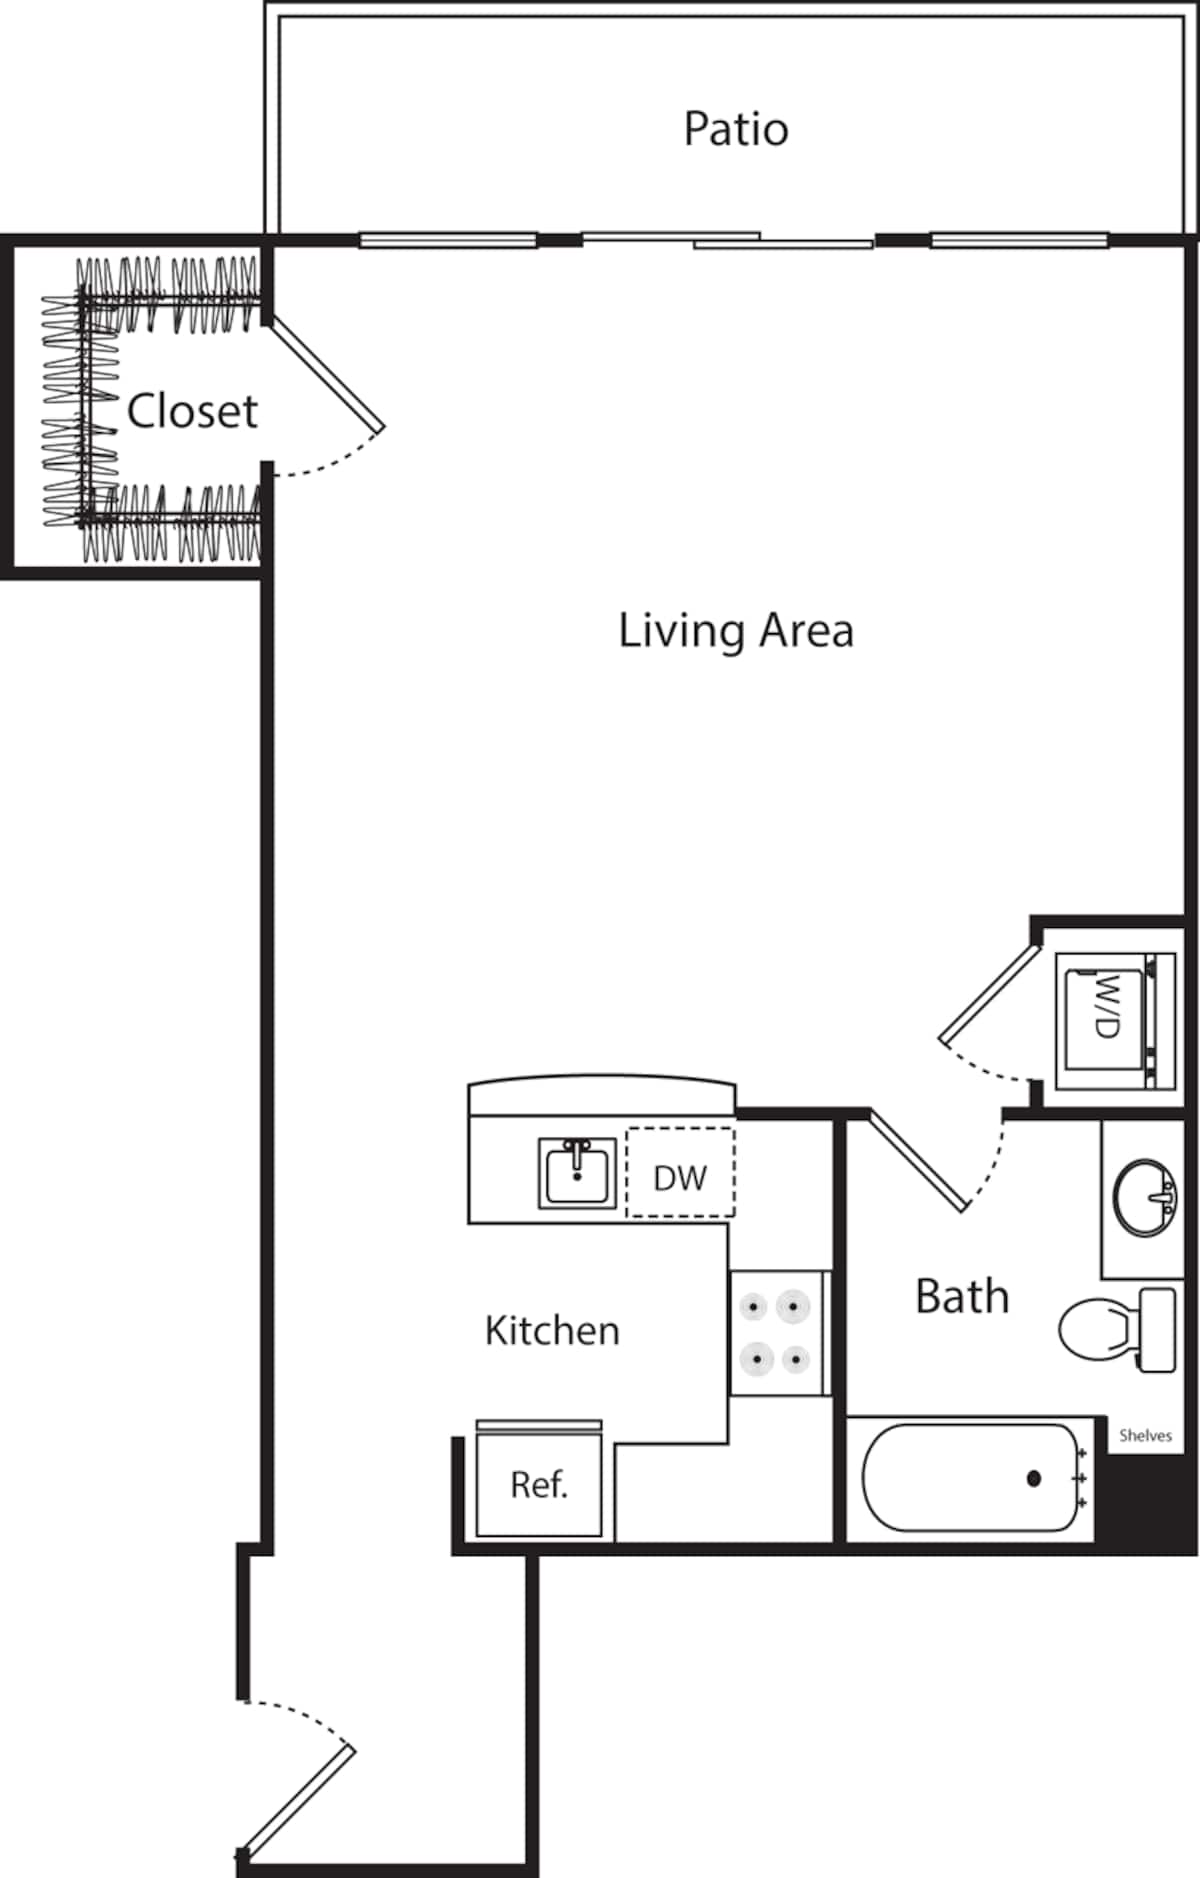 Floorplan diagram for One Bedroom J, showing 1 bedroom